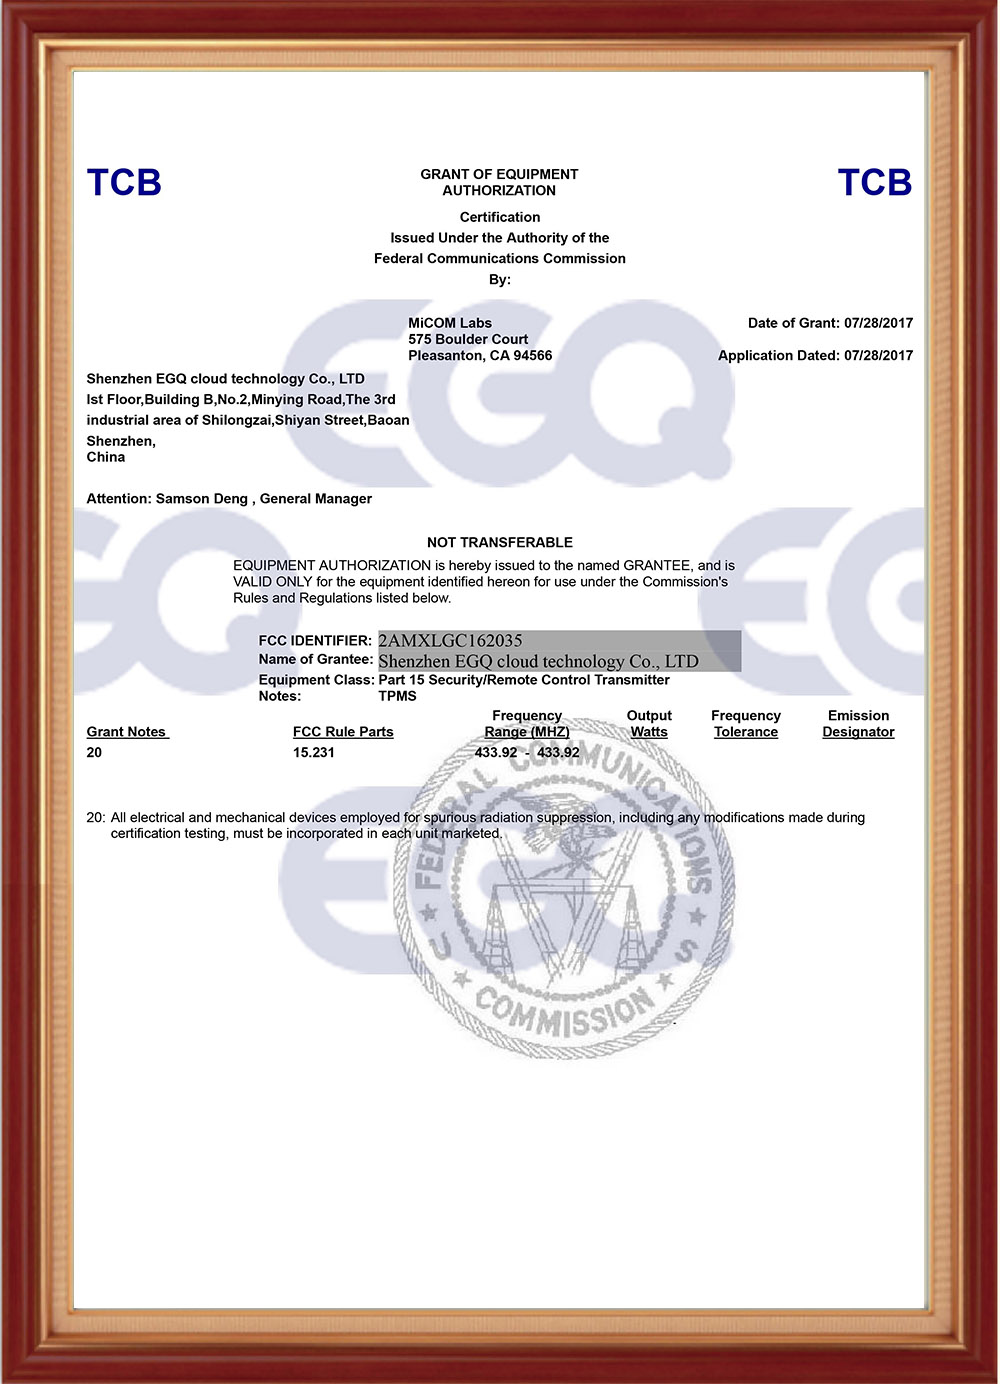 certificat-01 (1)